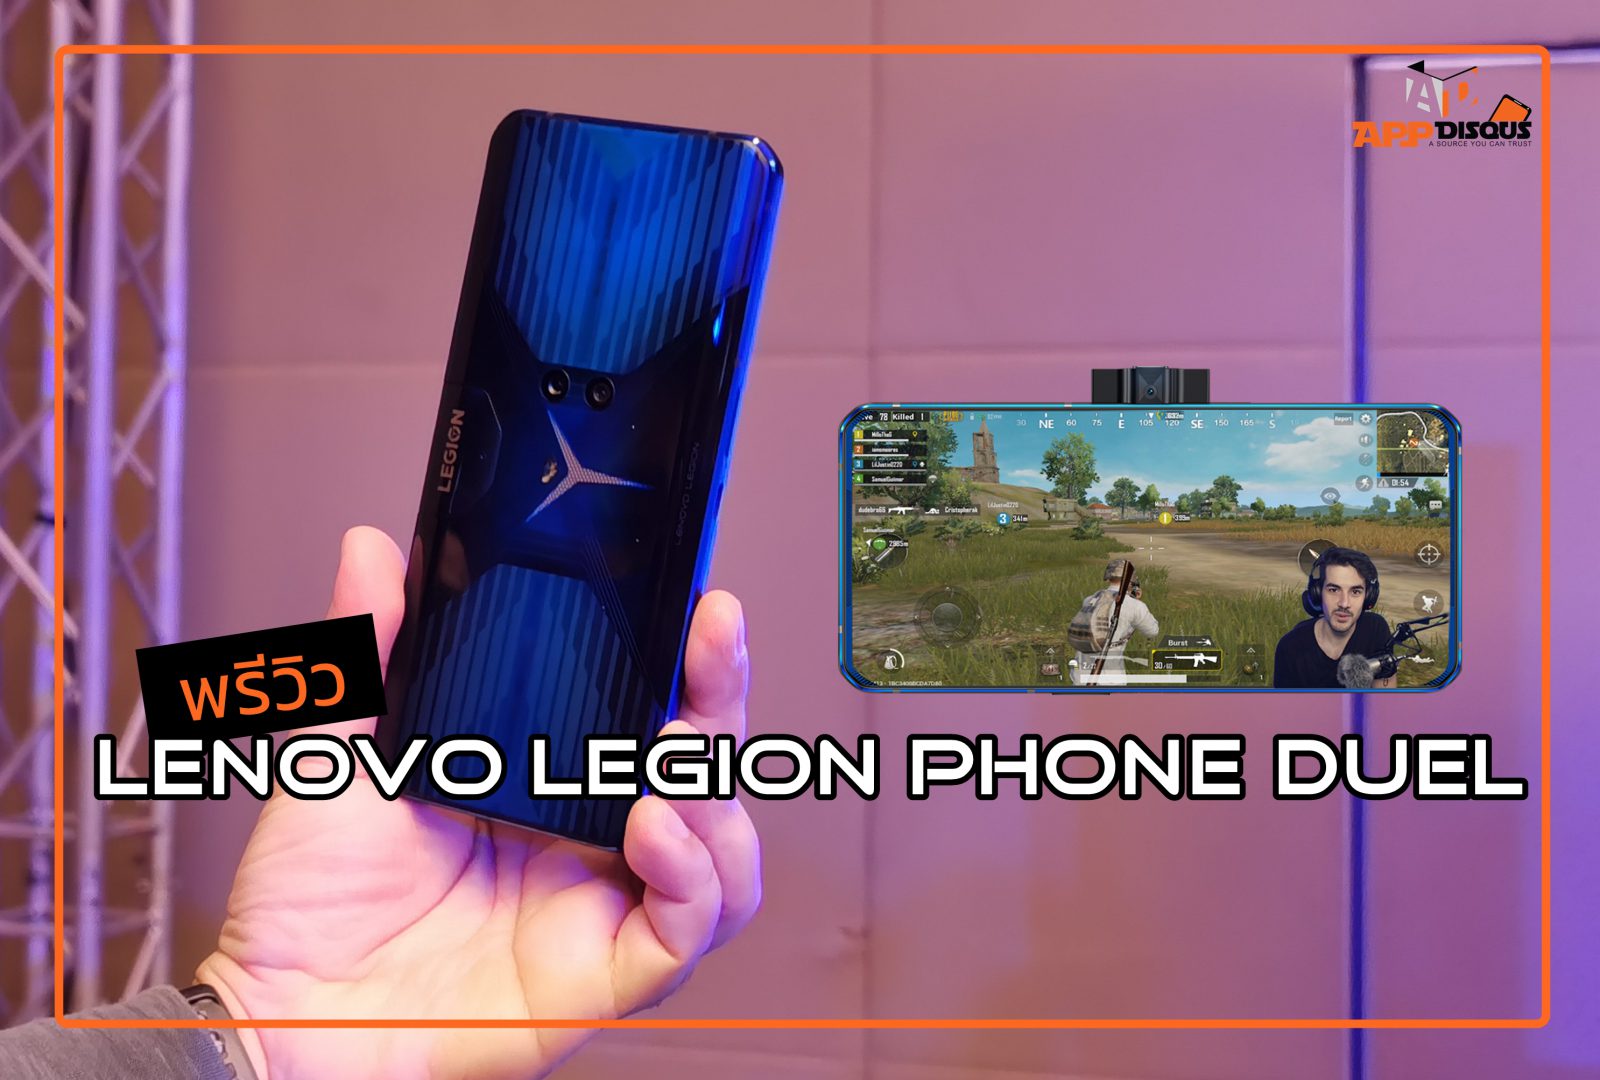 IMG 20201022 120518 | Lenovo Legion Phone Duel | พรีวิว Lenovo Legion Phone Duel เกมมิ่งสมาร์ทโฟน ที่เกมเมอร์ต้องการ!!